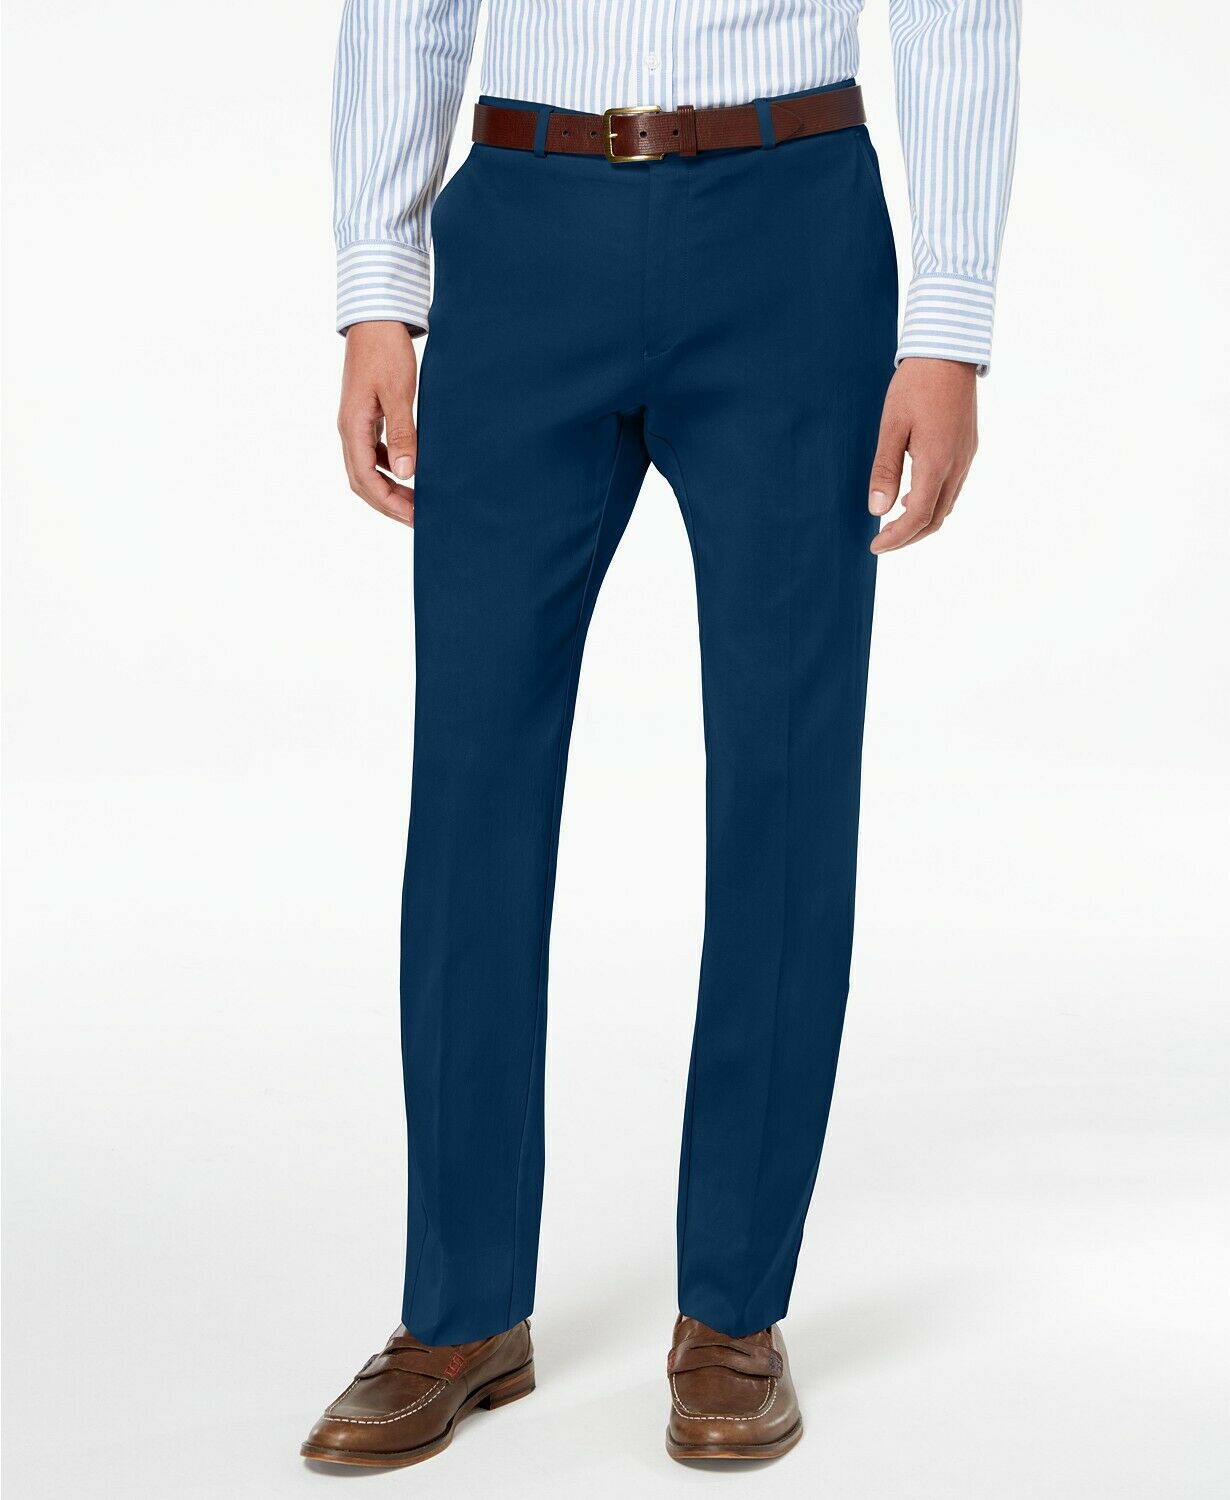 Tommy Hilfiger Mens Dress Pants 38 x 30 Navy Blue Modern-Fit TH Flex Stretch